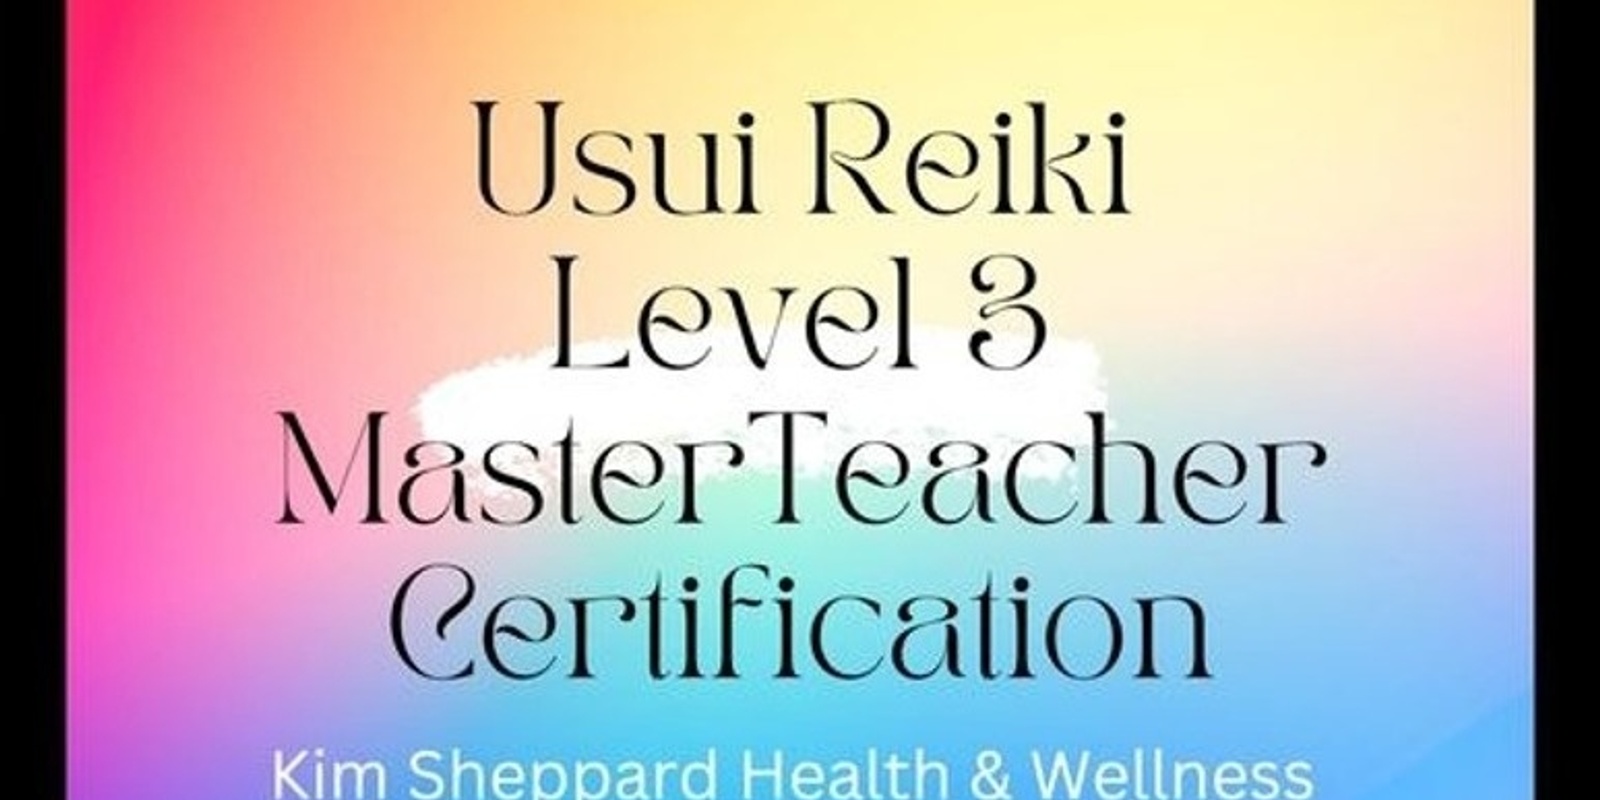 Banner image for Usui Reiki level 3 Masters